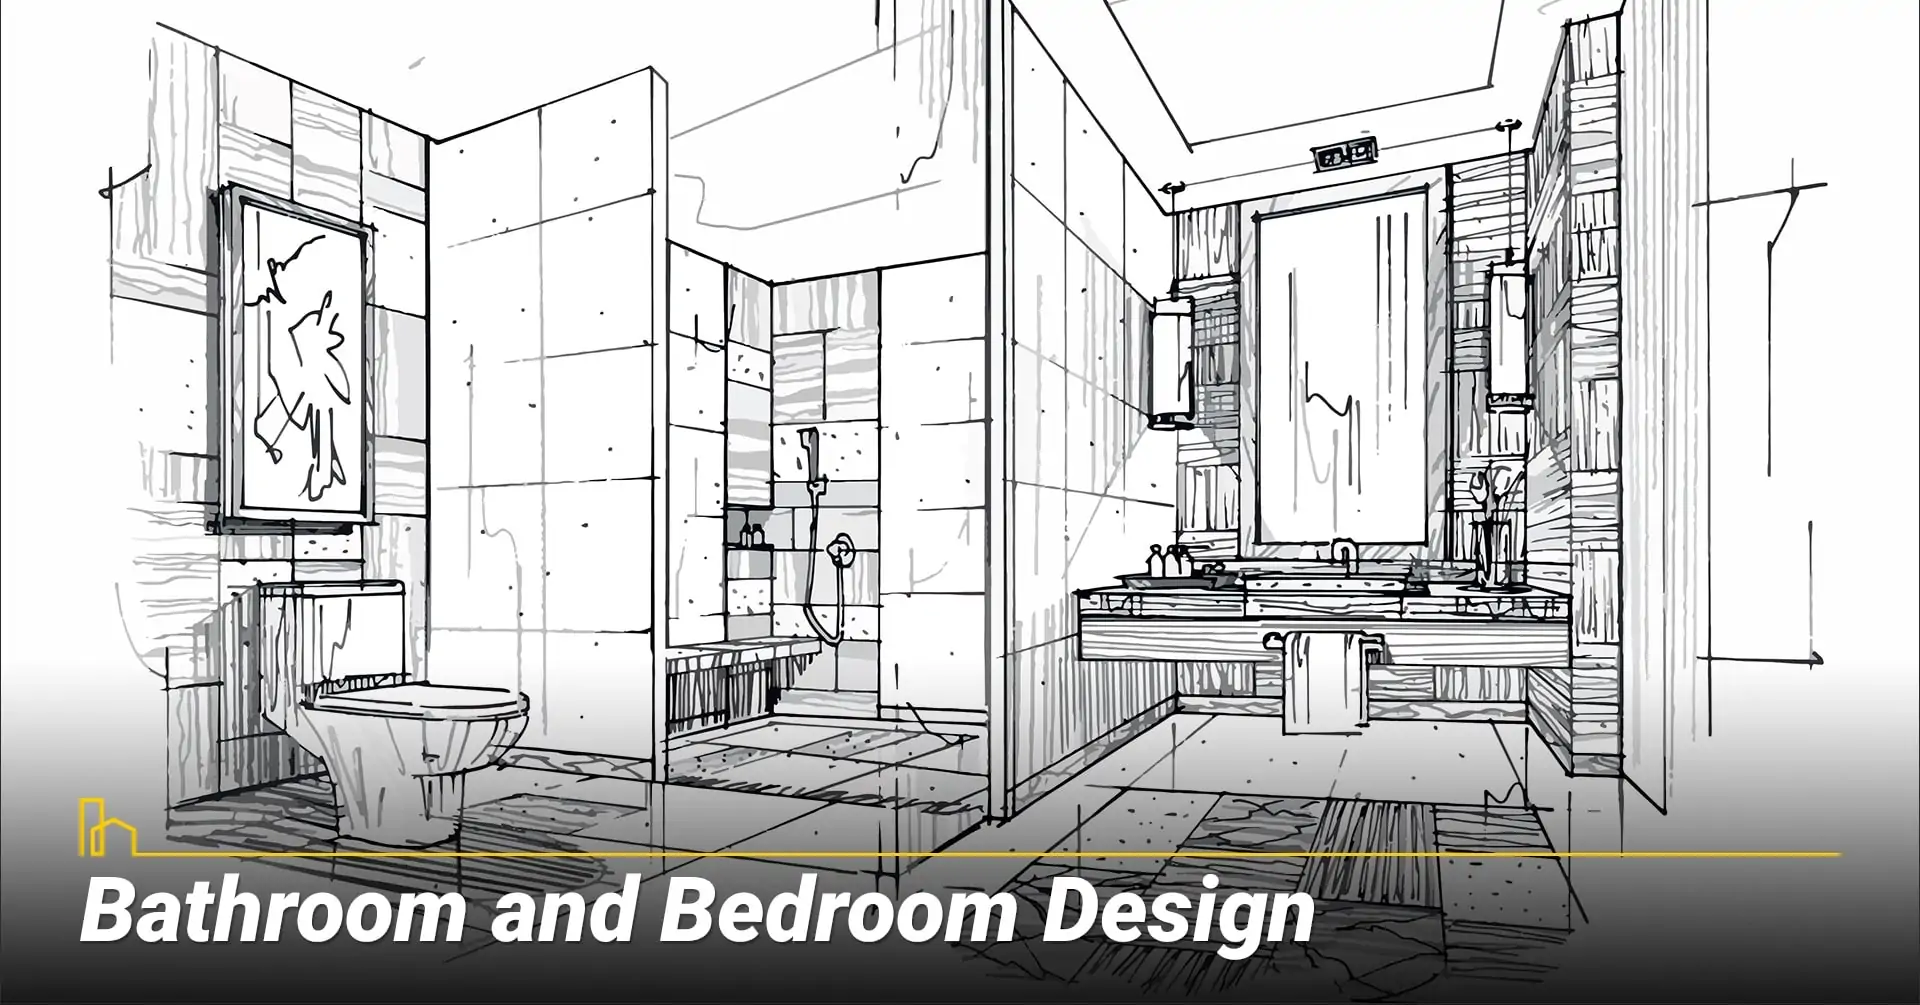 Bathroom and Bedroom Design, design your bathrooms and bedrooms